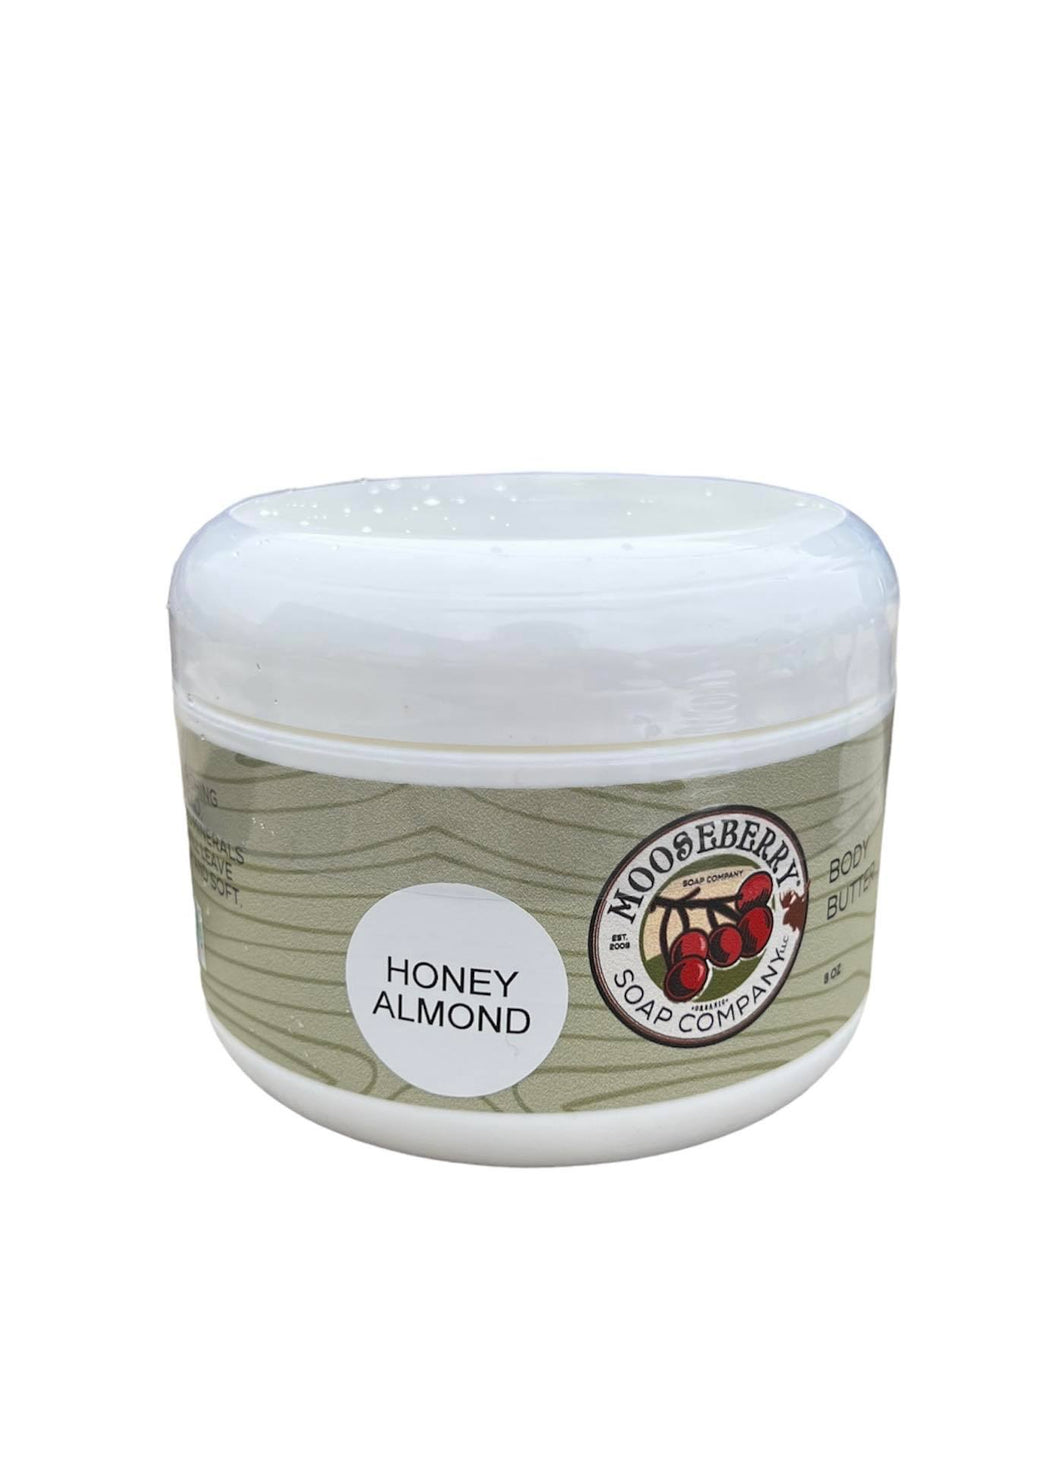 Body butter - Honey Almond